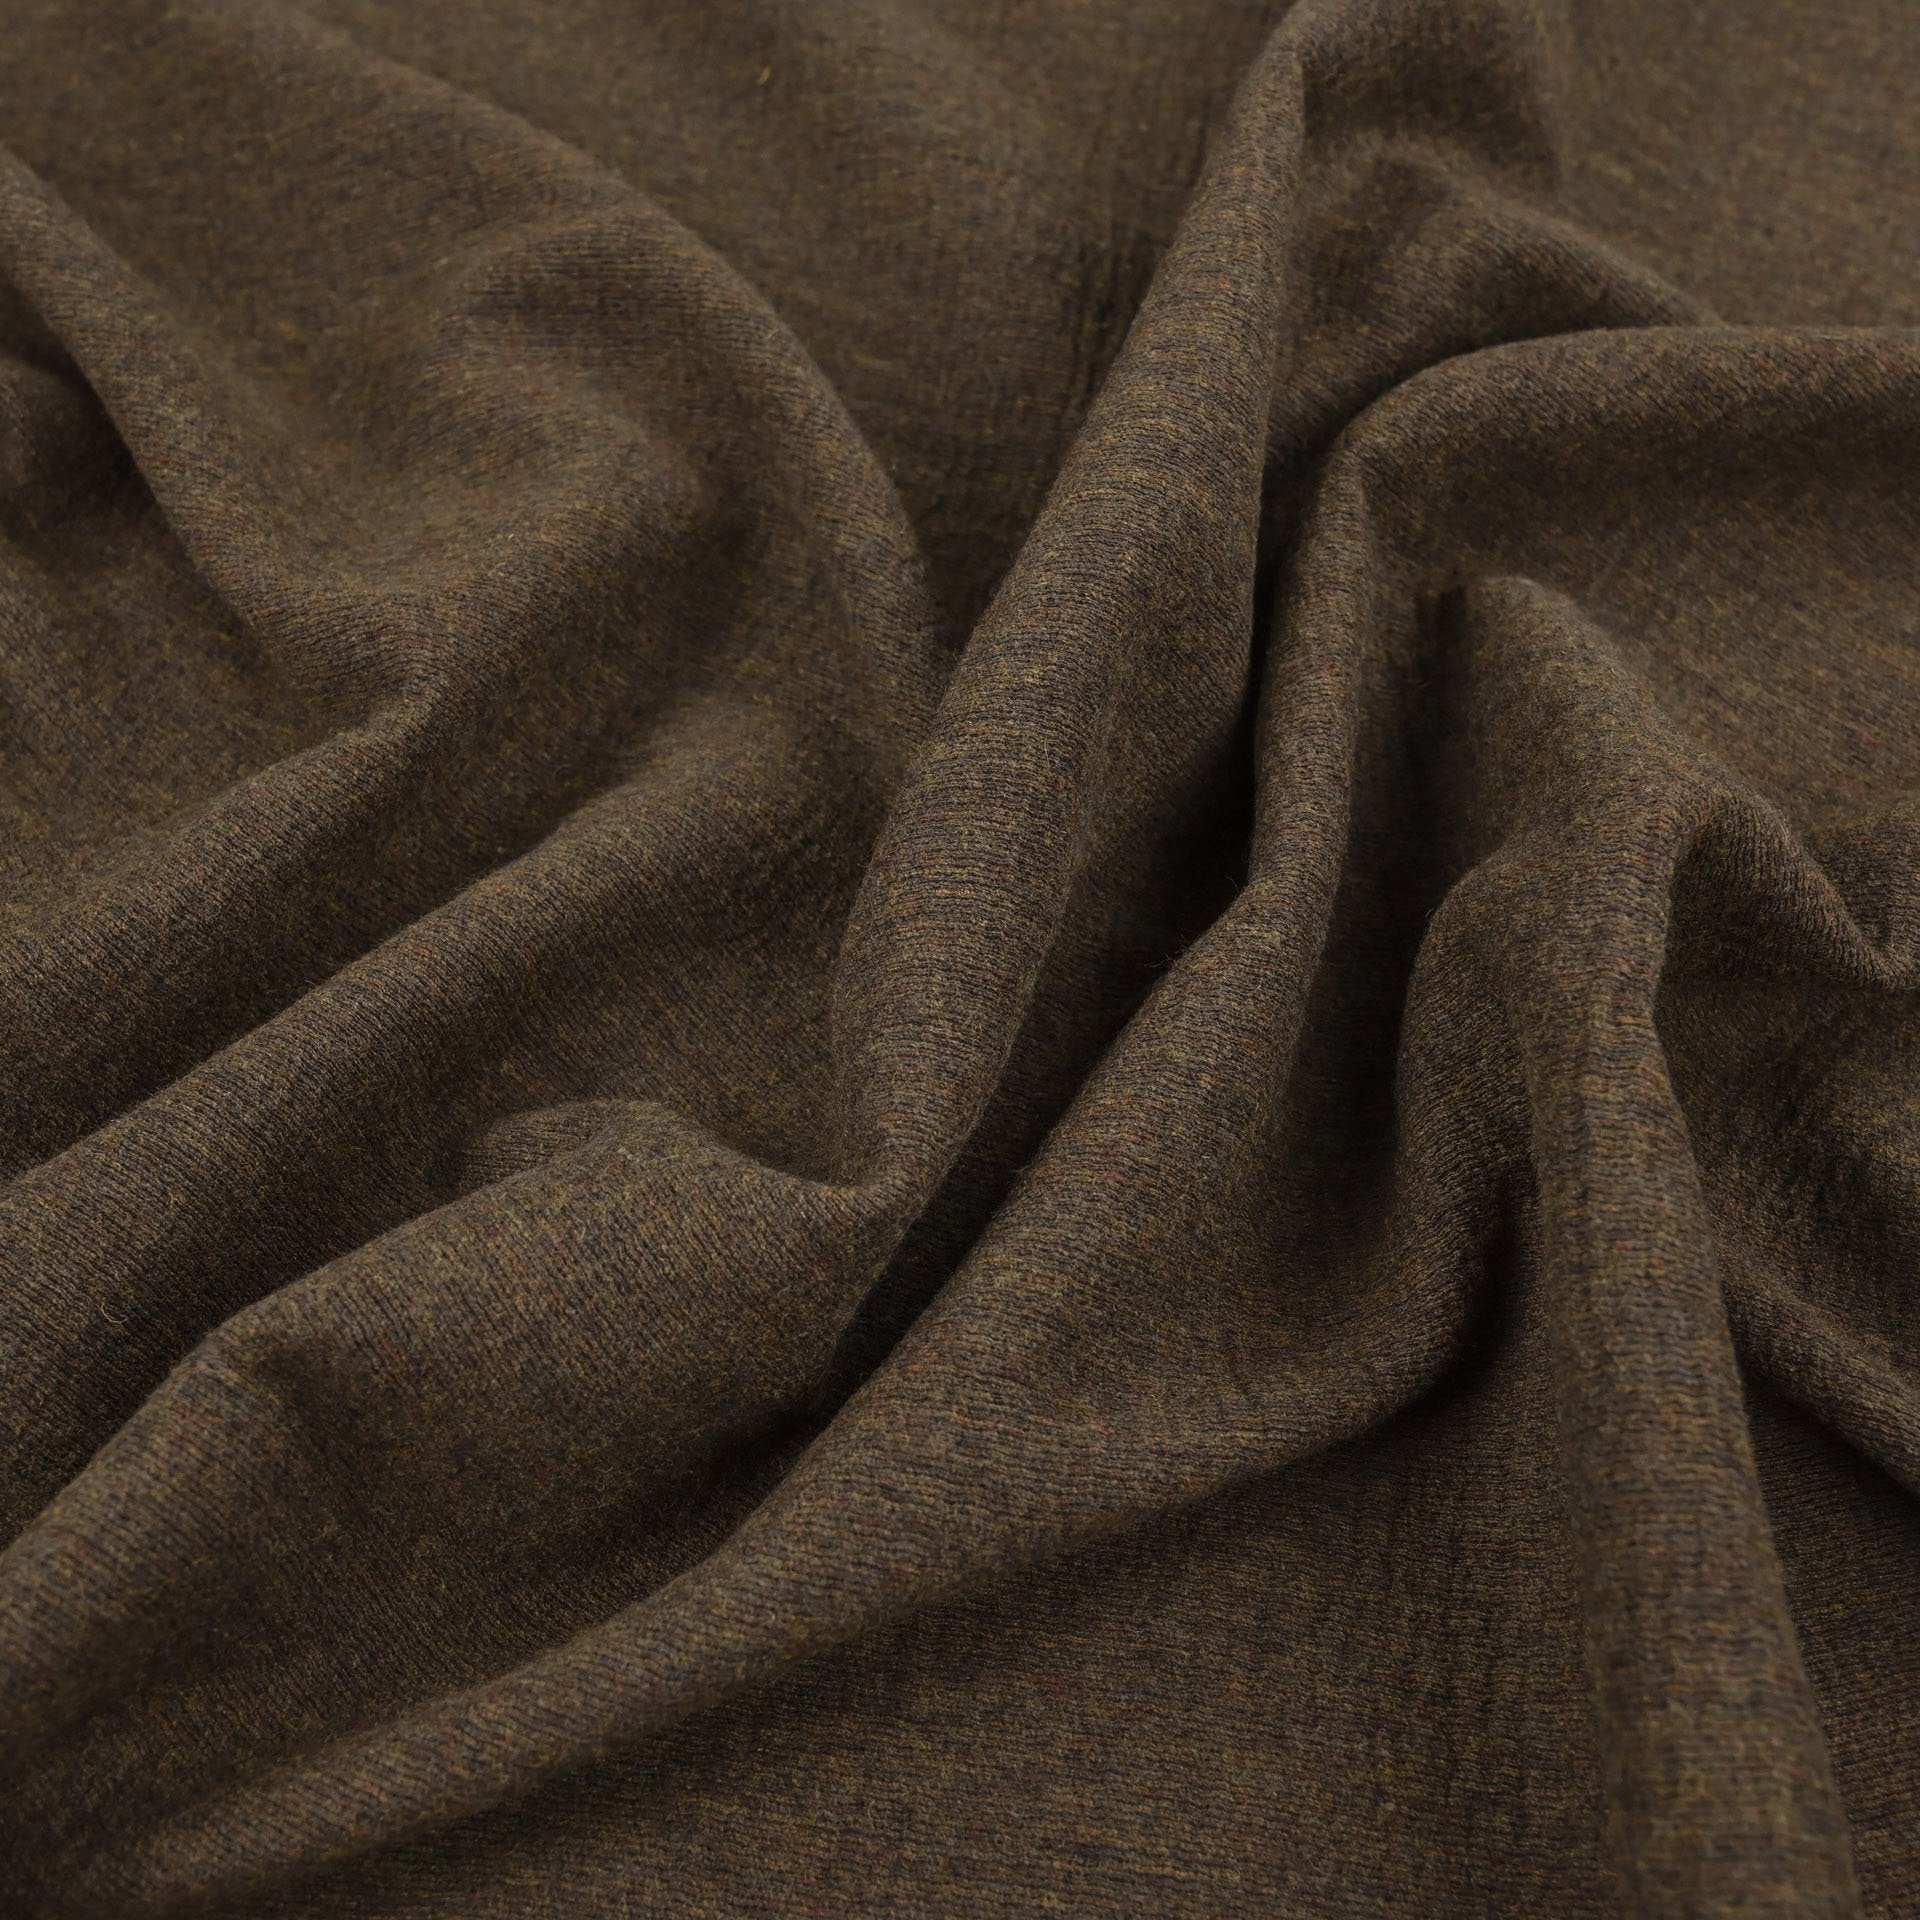 Brown Melange Jacket Fabric 96953